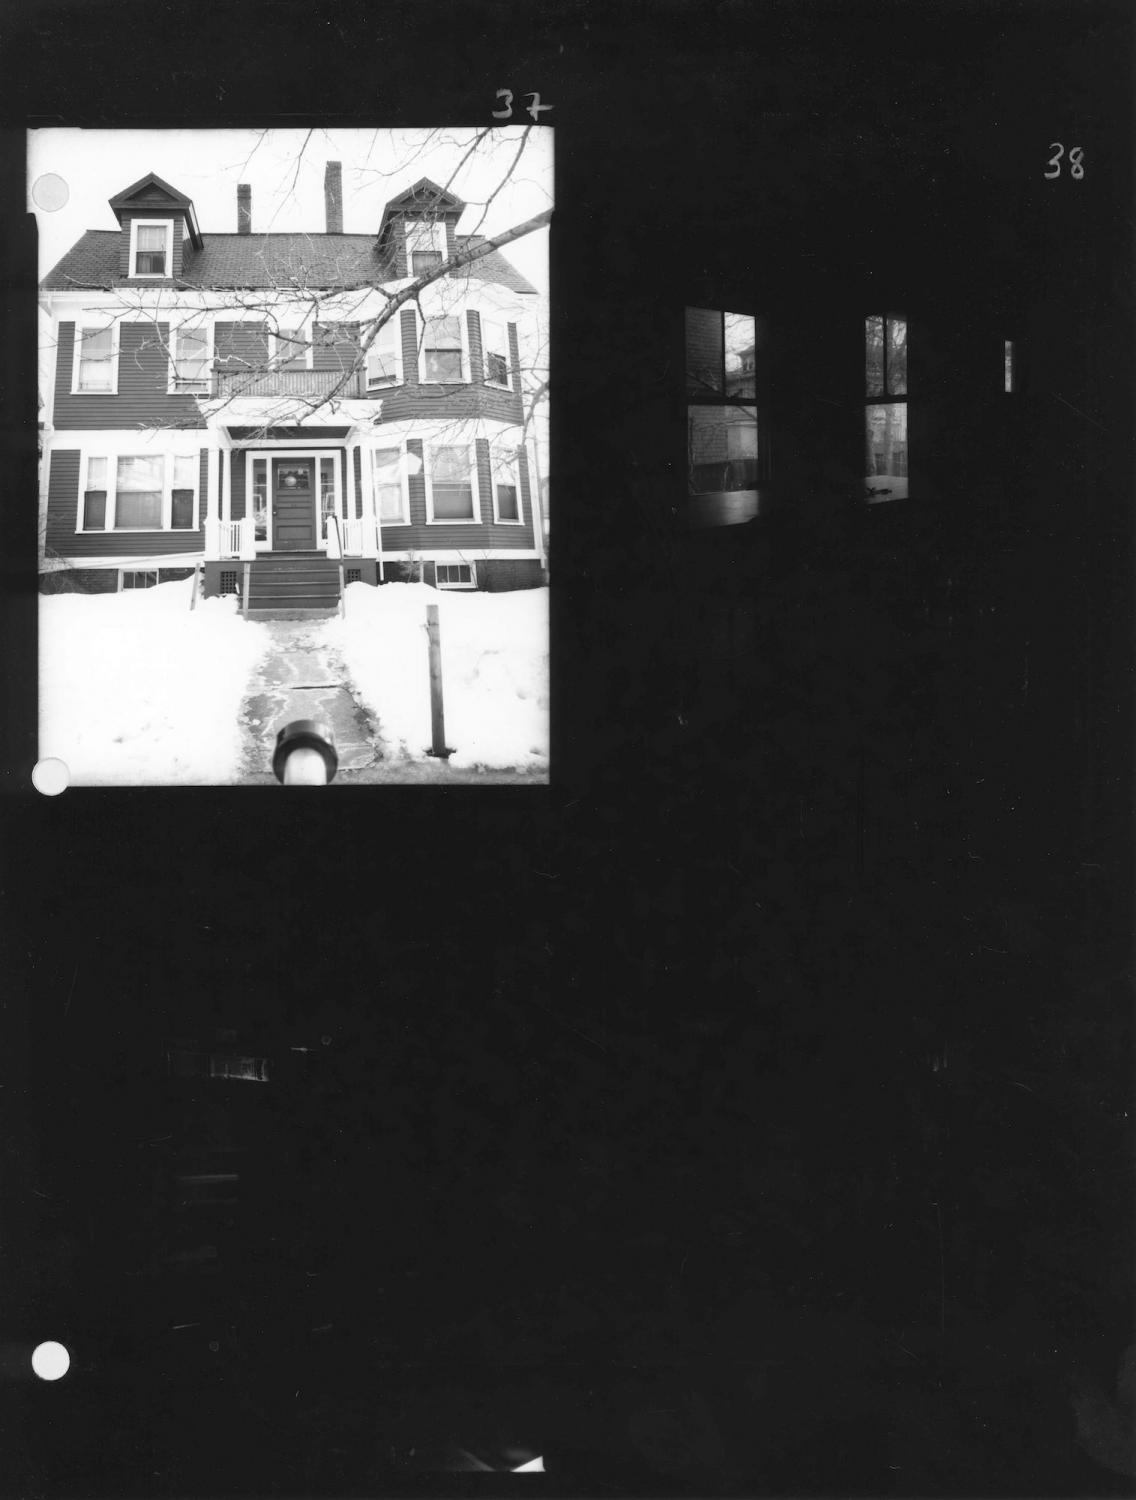 44 Irving Street - Contact Sheet. 44 Irving Street, Cambridge, MA. 1971.